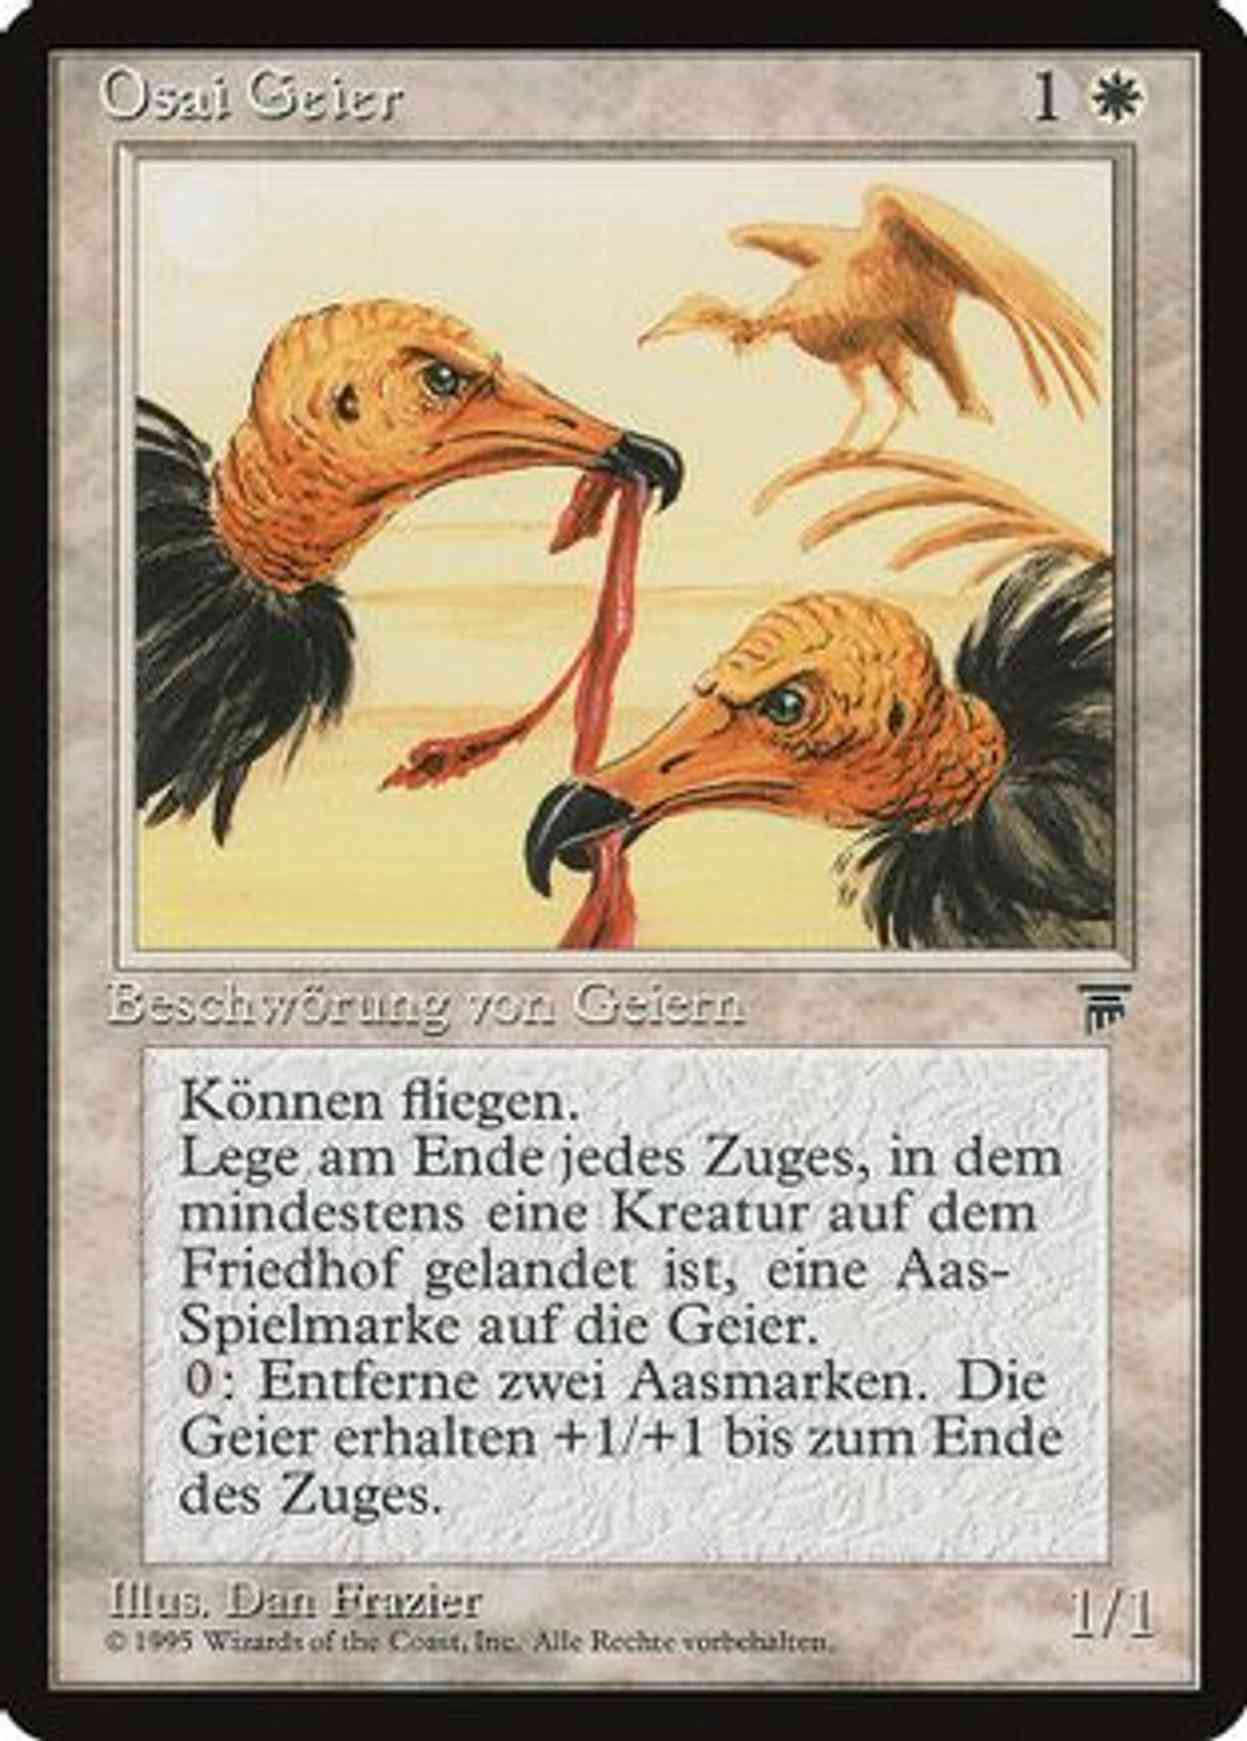 Osai Vultures (German) - "Osai Geier" magic card front